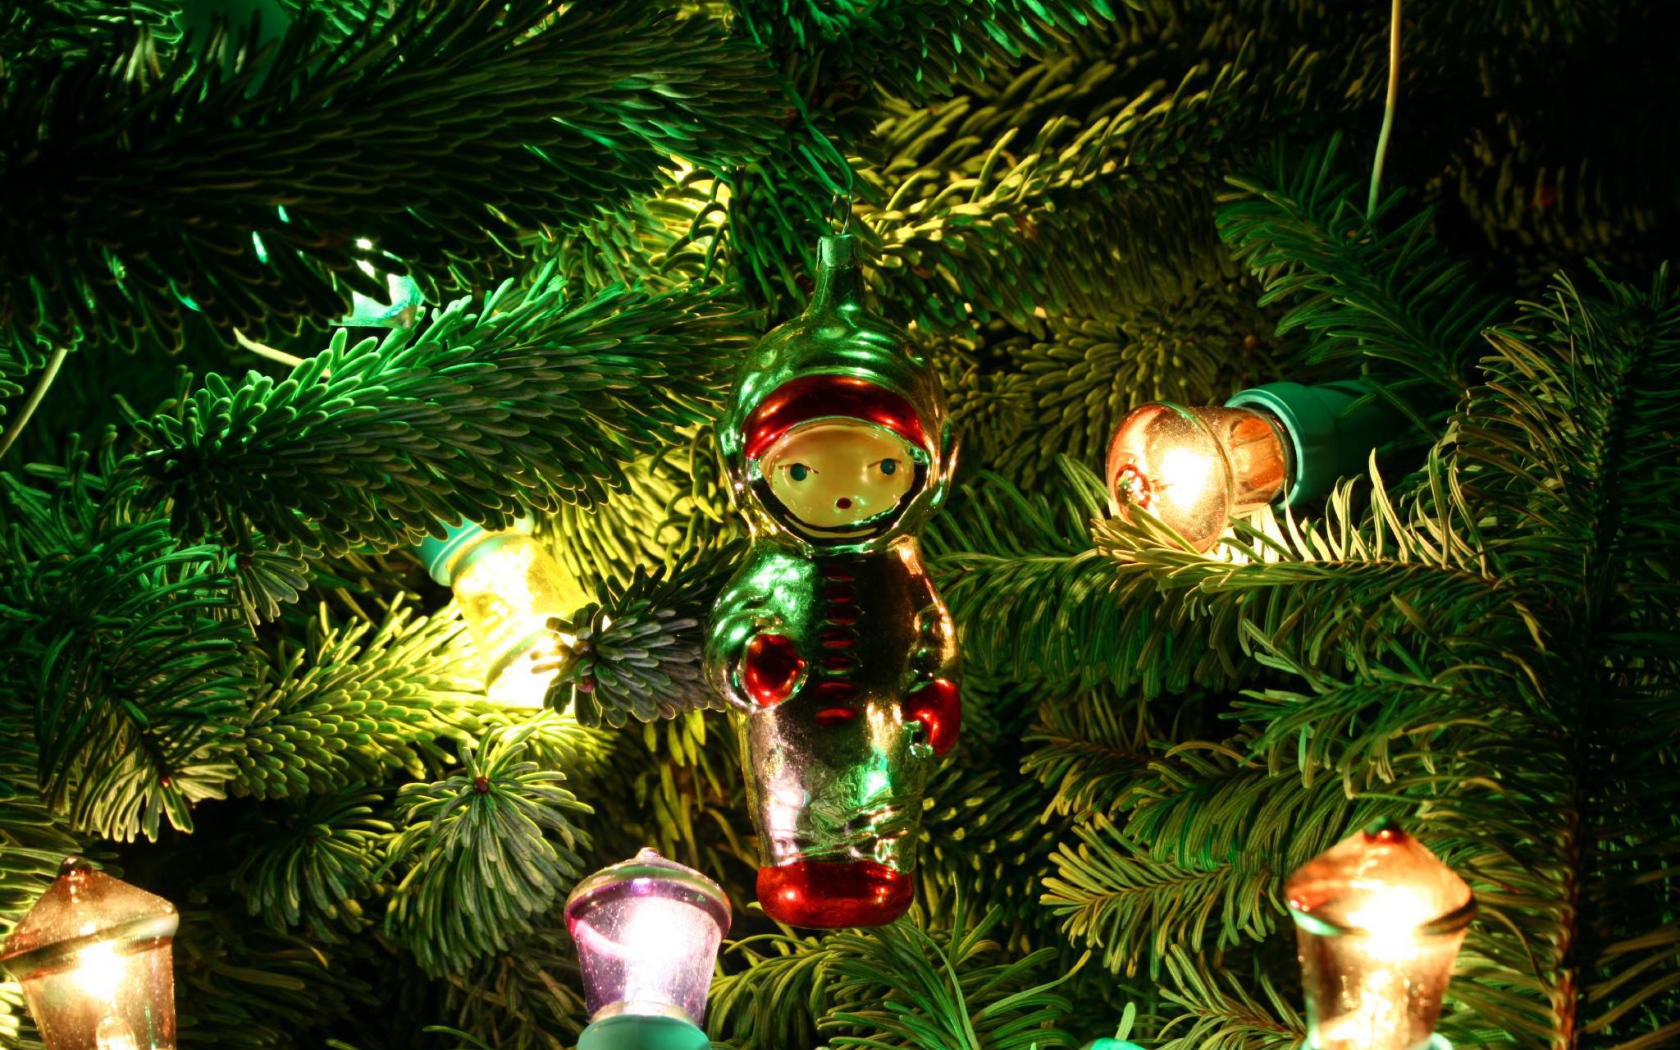 Photos of Christmas tree toys